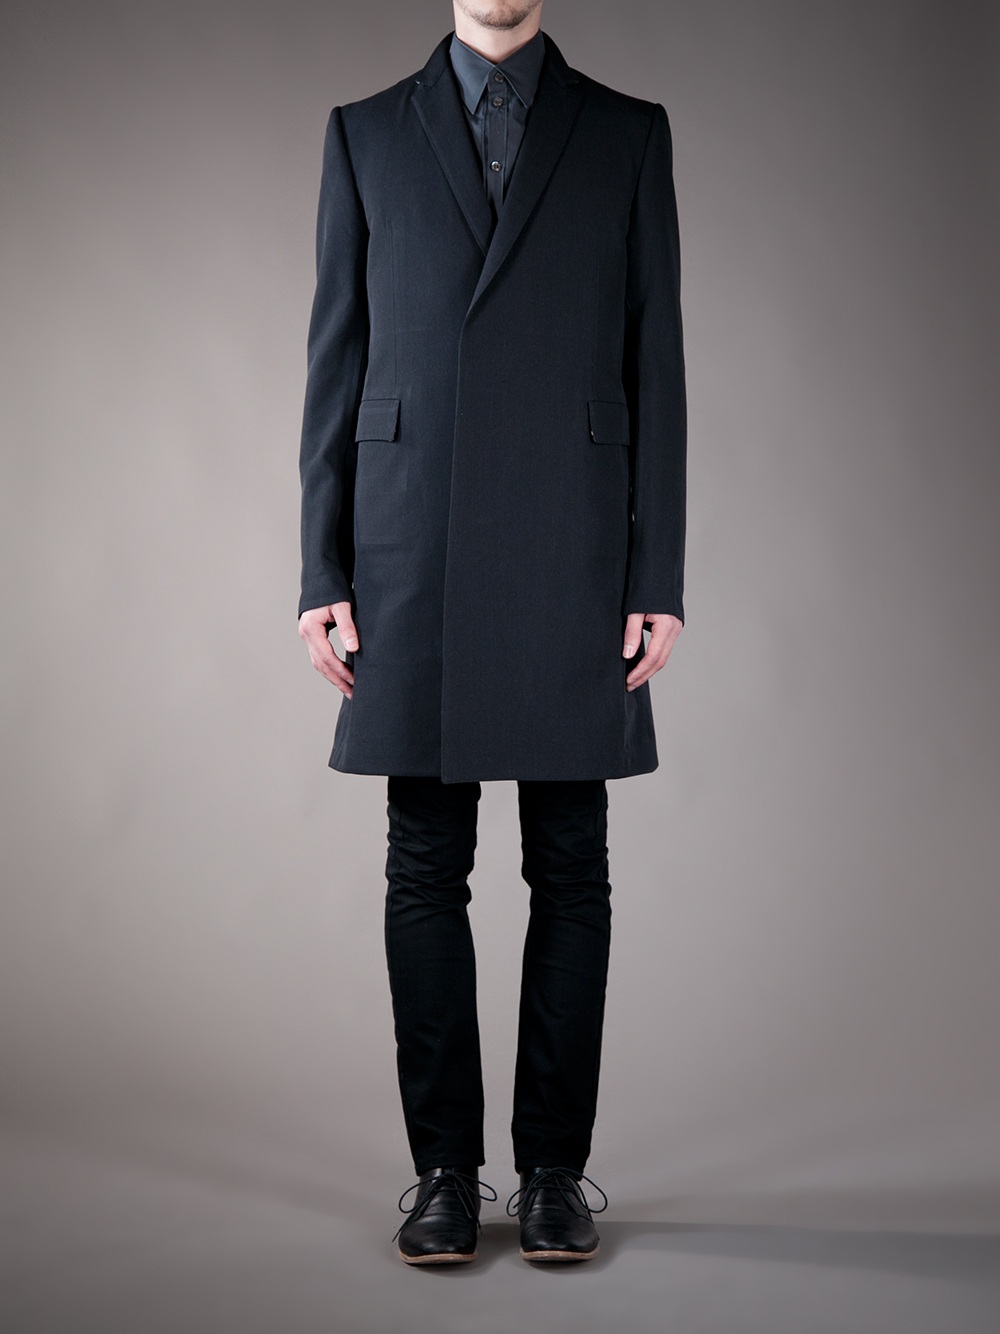 Lyst - Carol Christian Poell Long Coat in Gray for Men